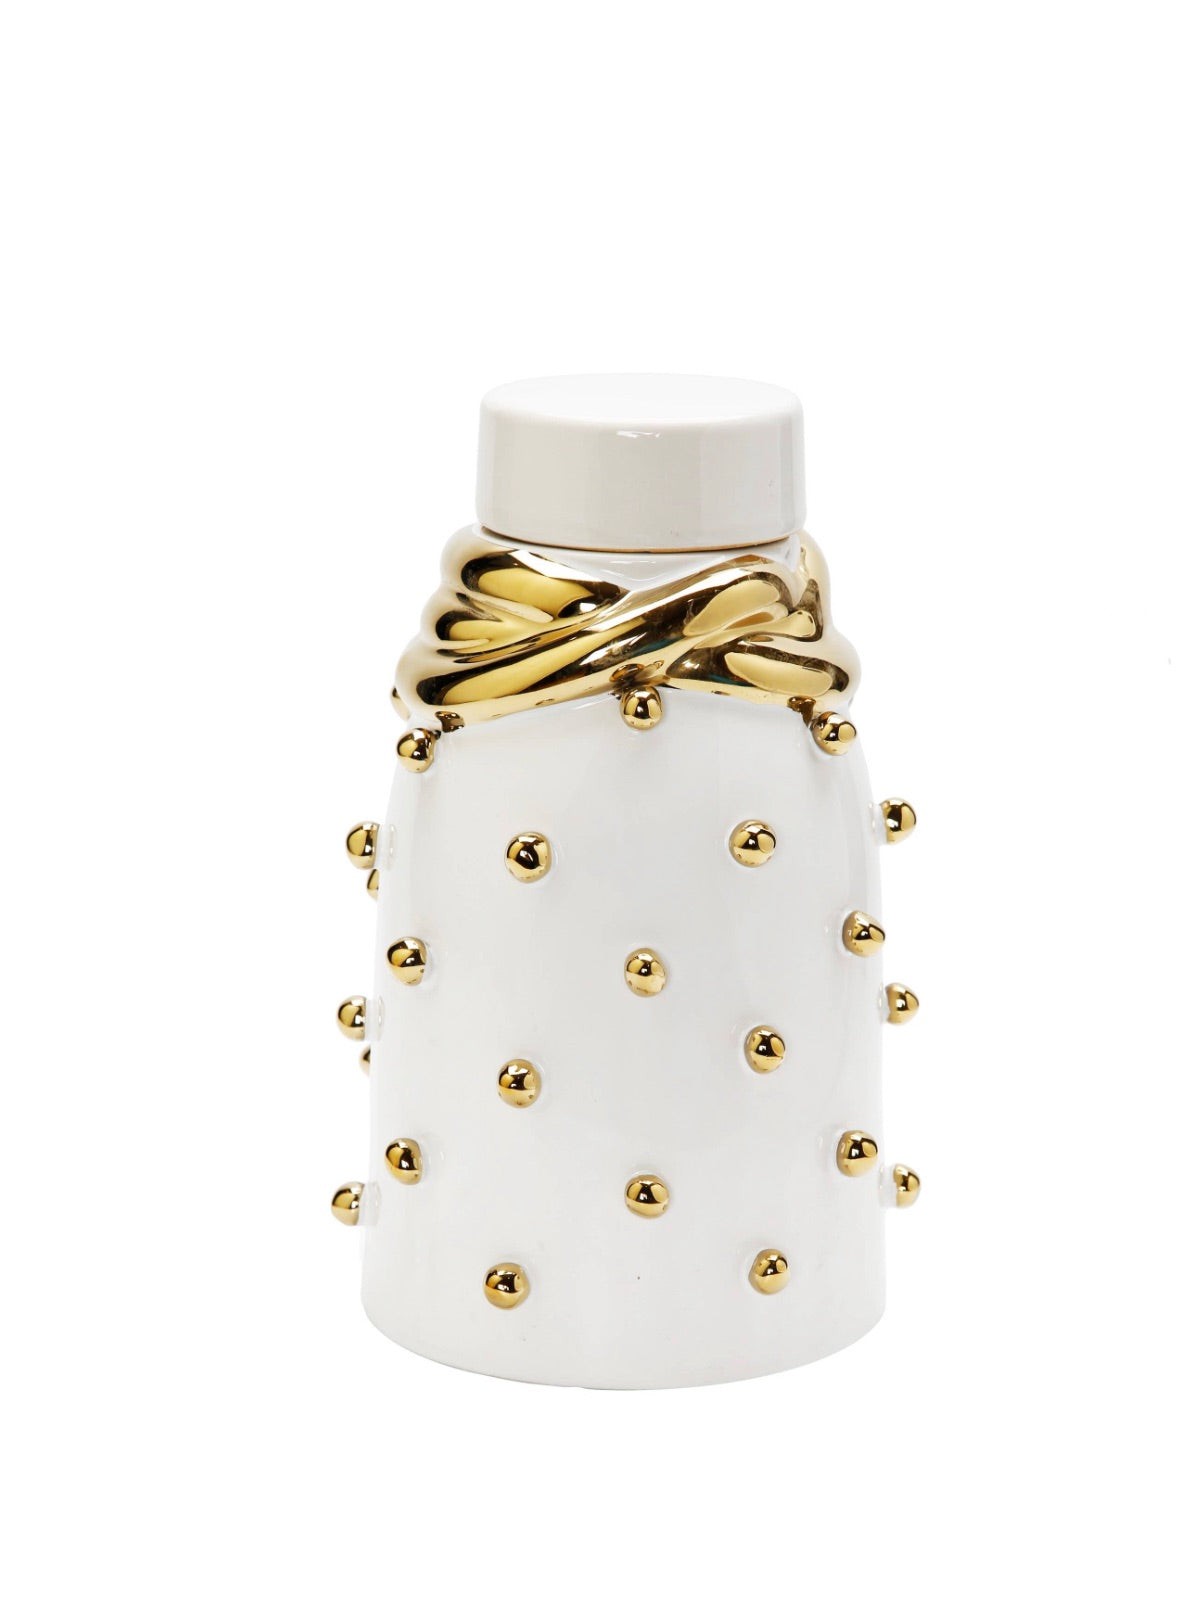 White Ceramic Lidded Jar With Gold Studded Details, Medium.